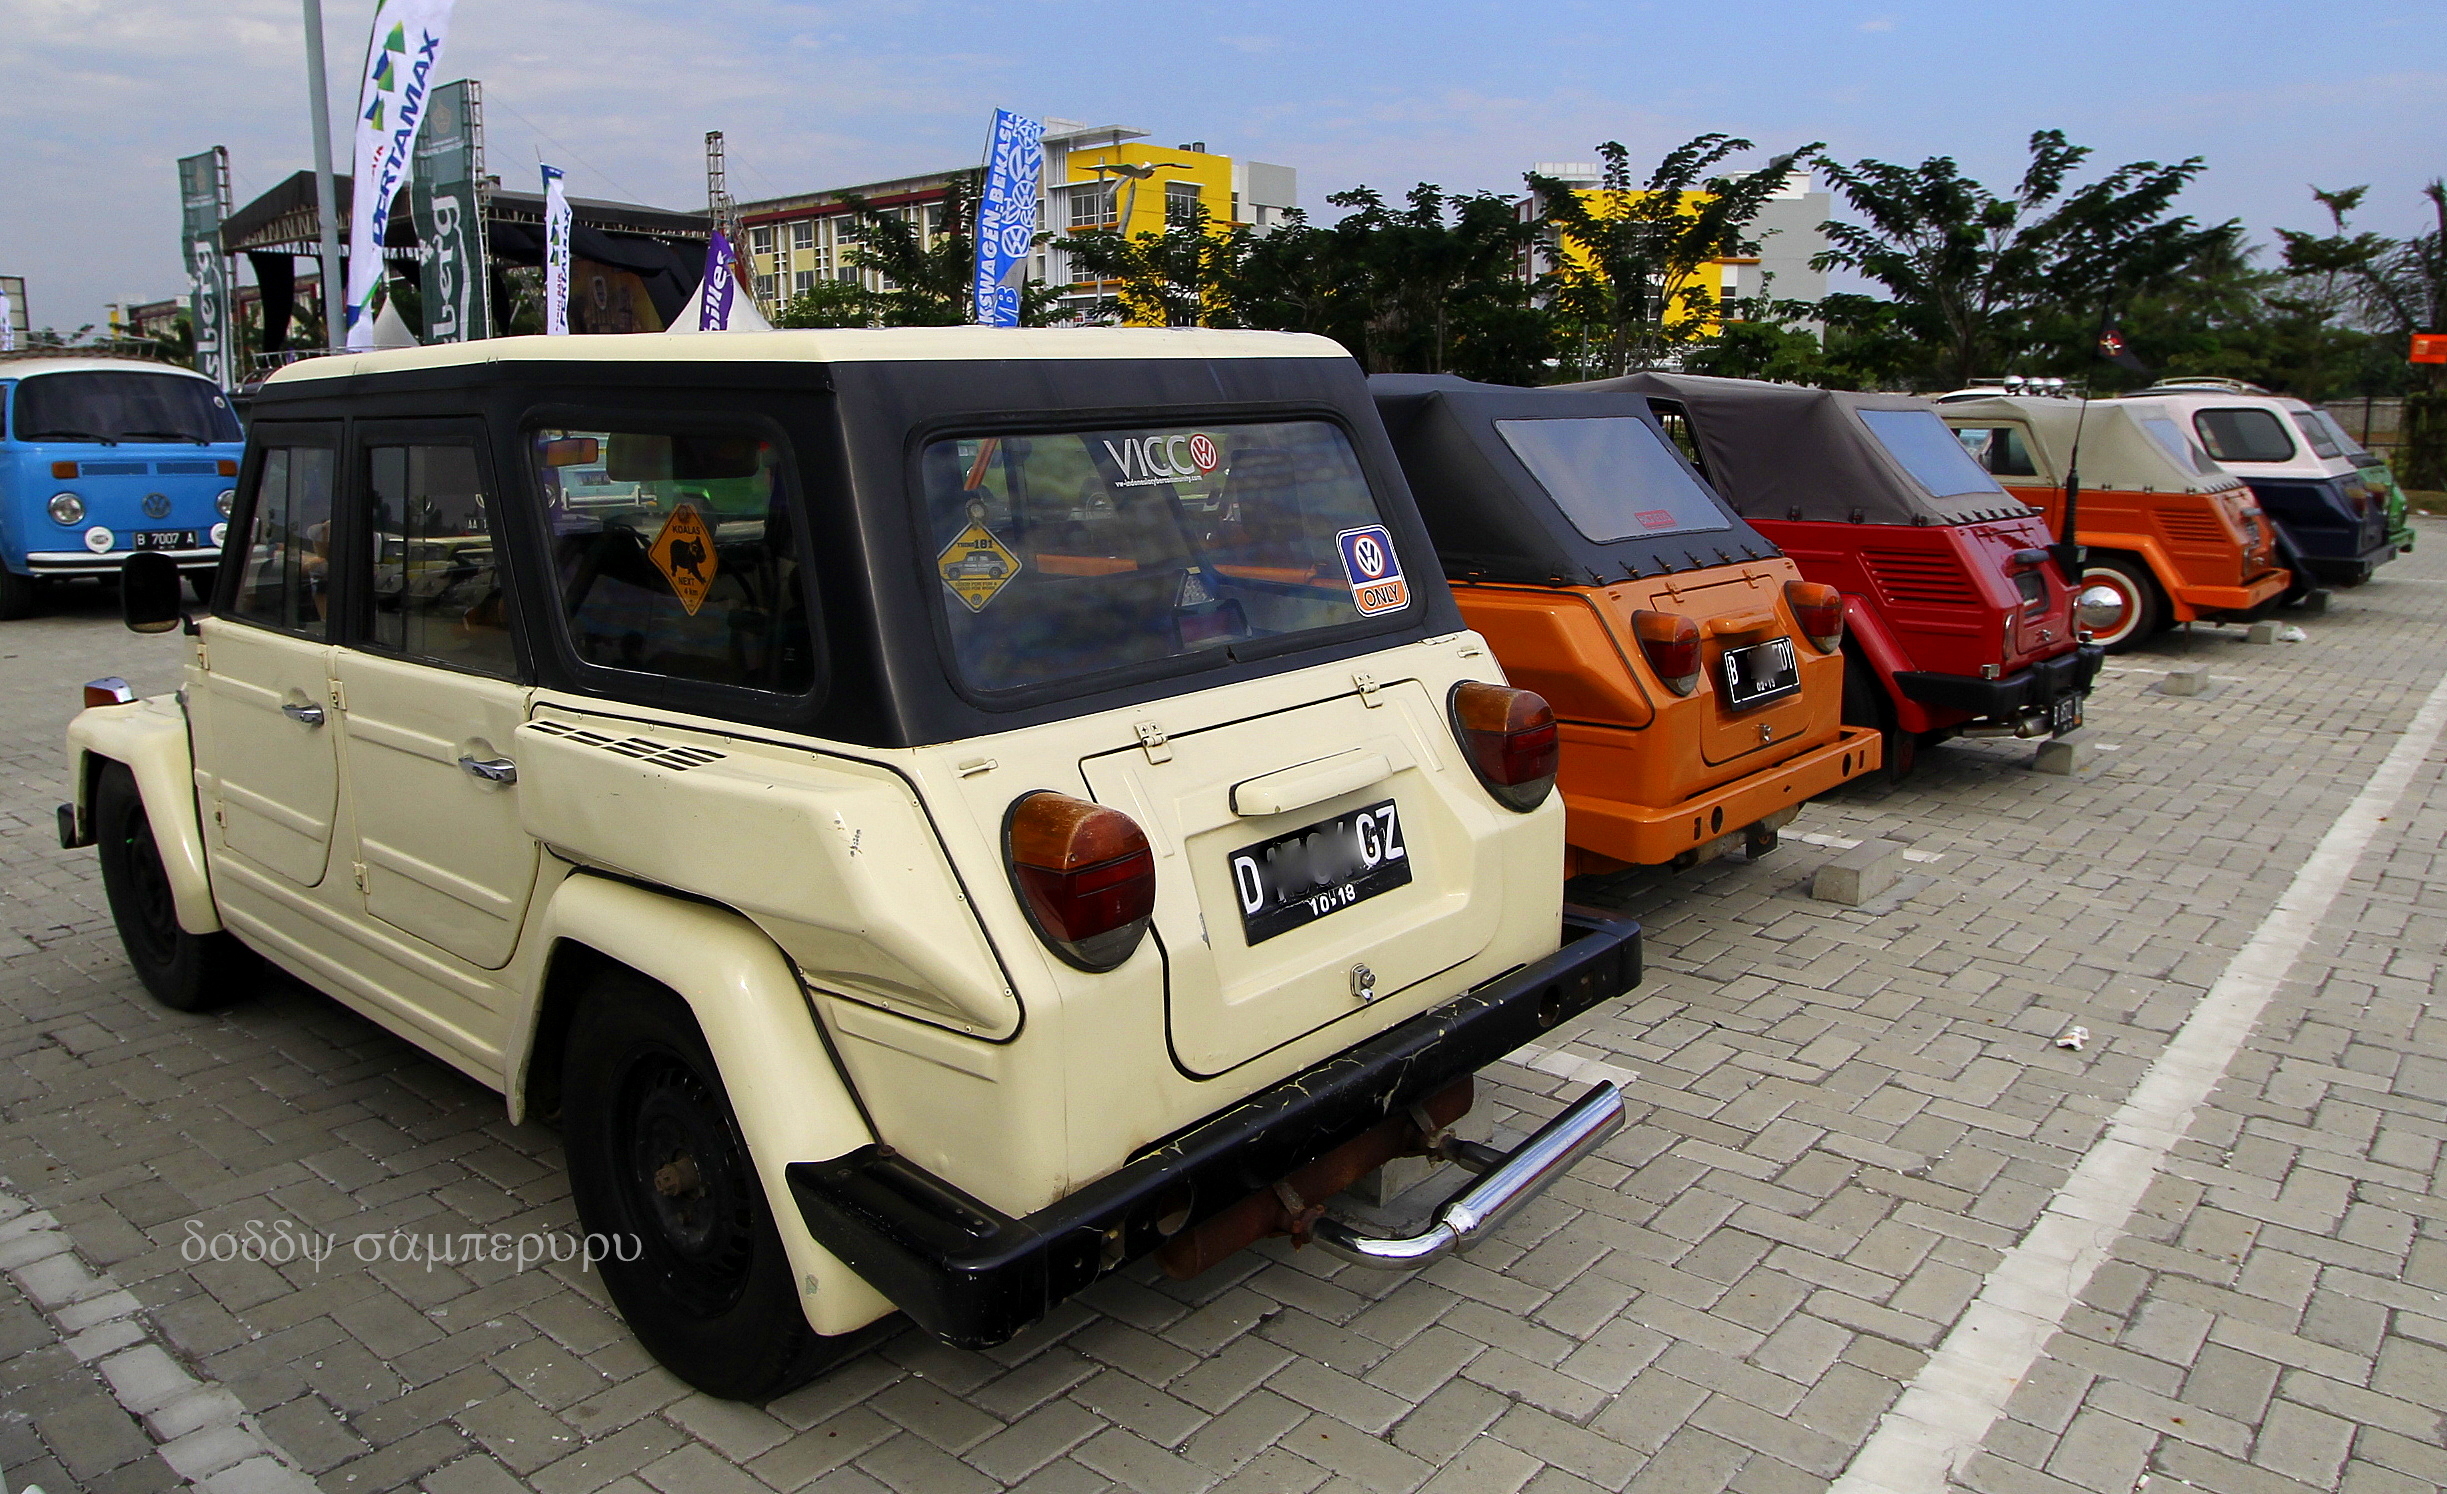 VW Safari Rental Indonesia Jakarta VW Campervan